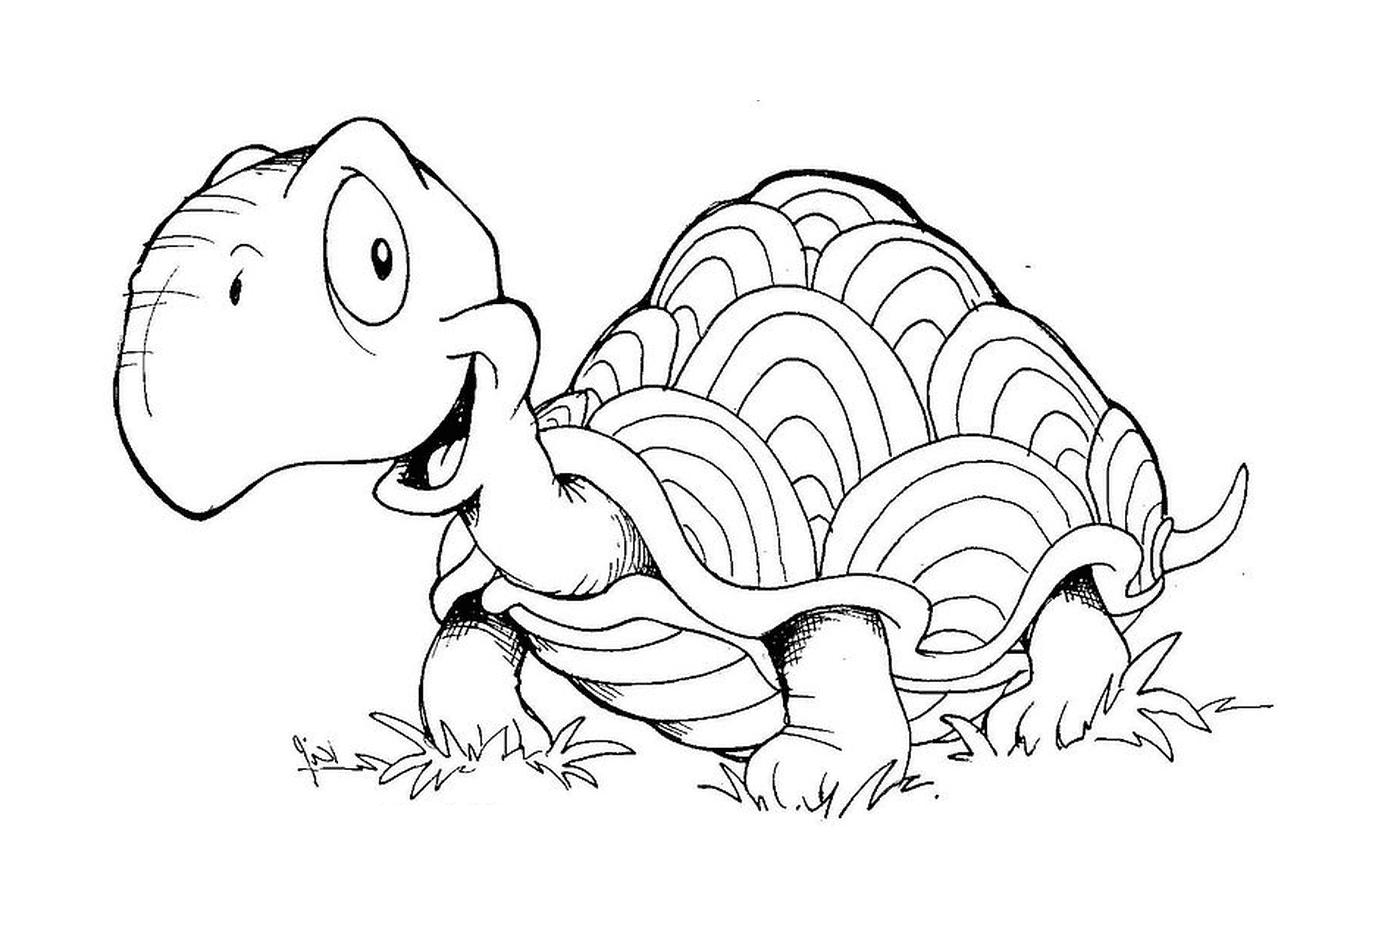  Uma tartaruga na grama 